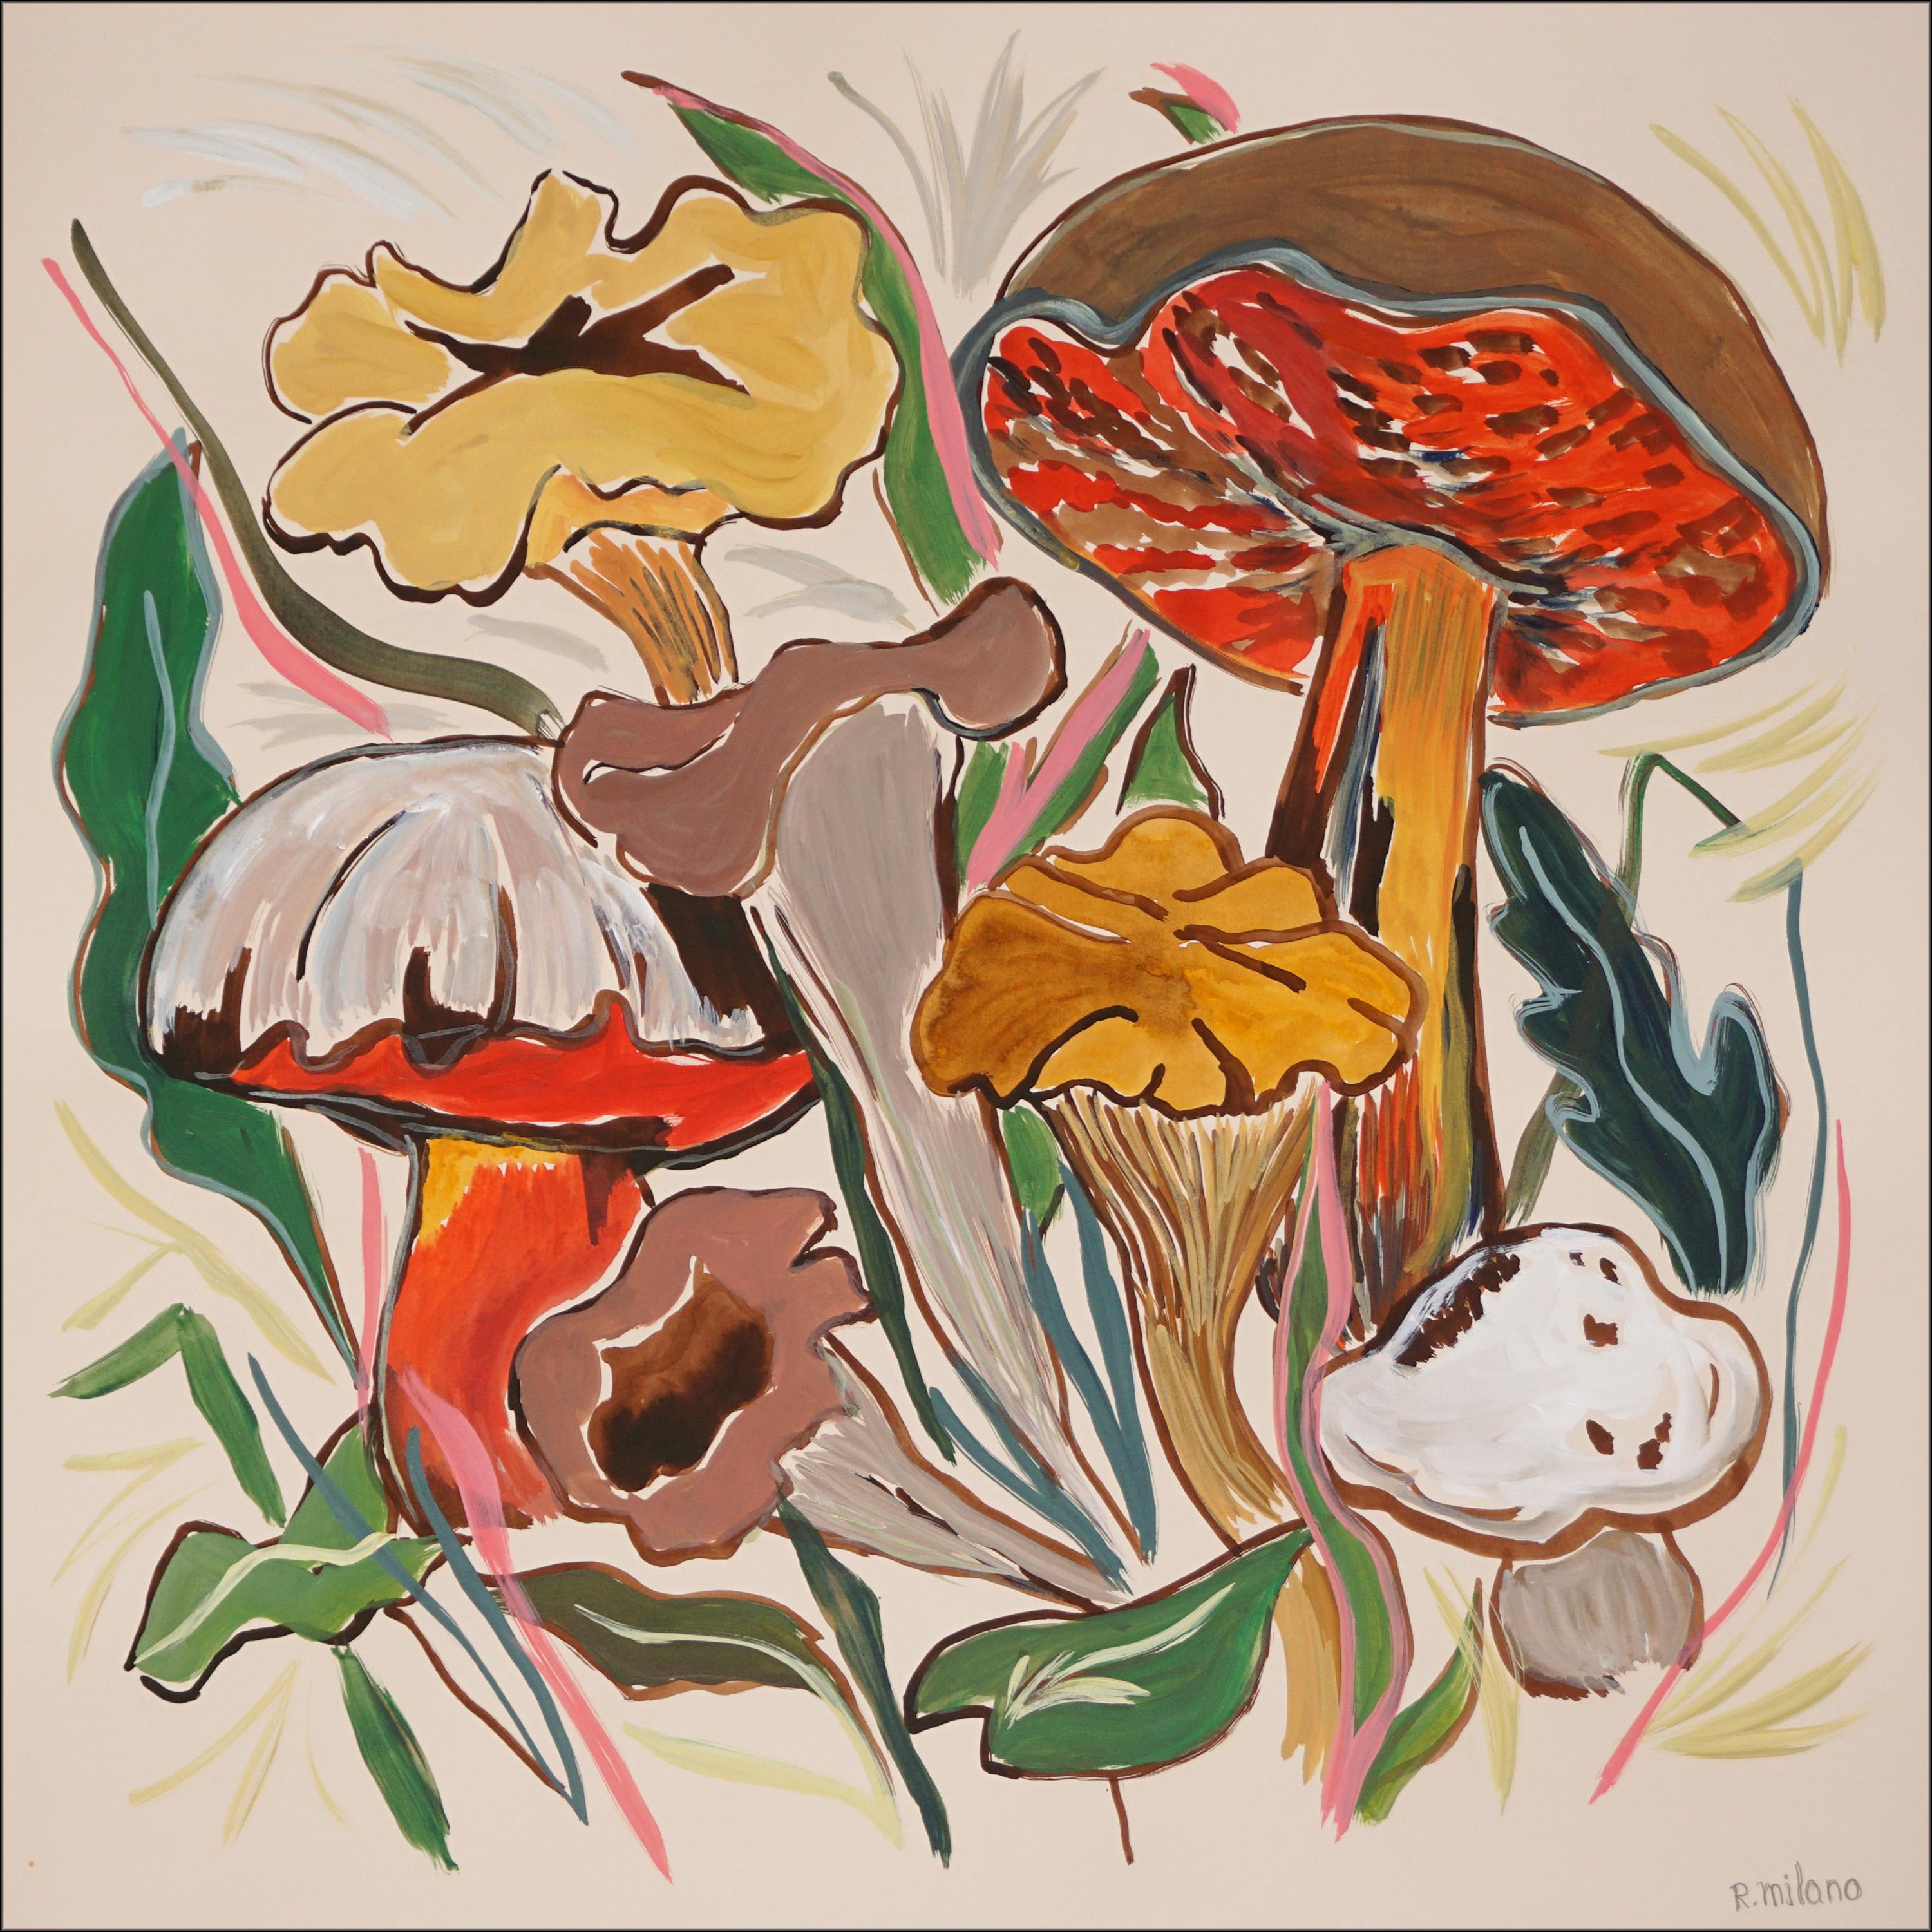 Romina Milano Still-Life Painting - Wild Mushrooms Harvest , Earth Tones Squared Landscape, Illustration Style, Red